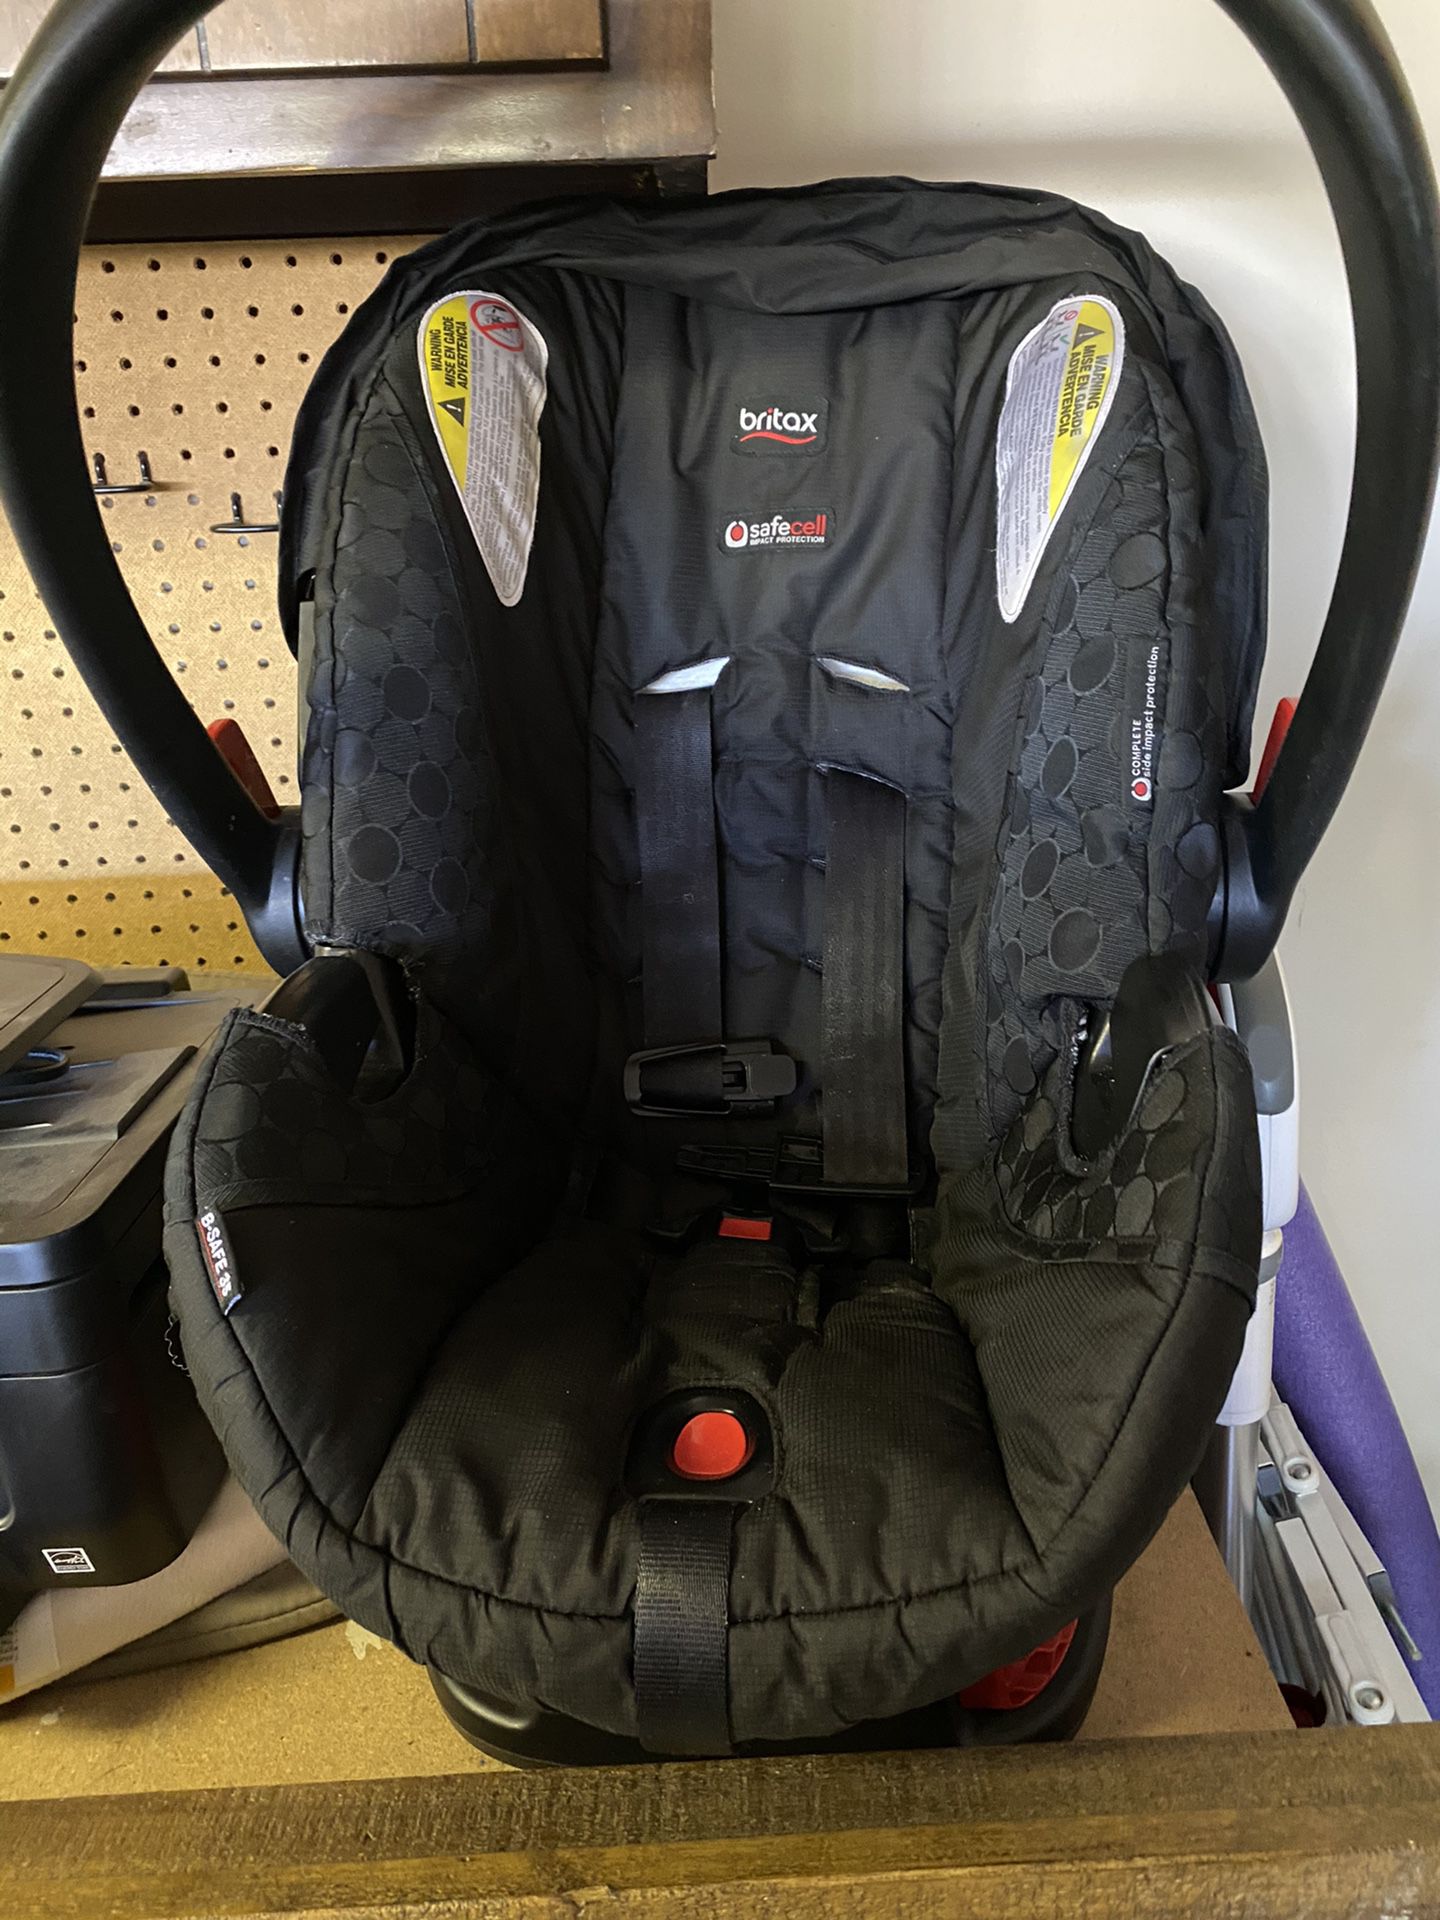 Britax infant car seat